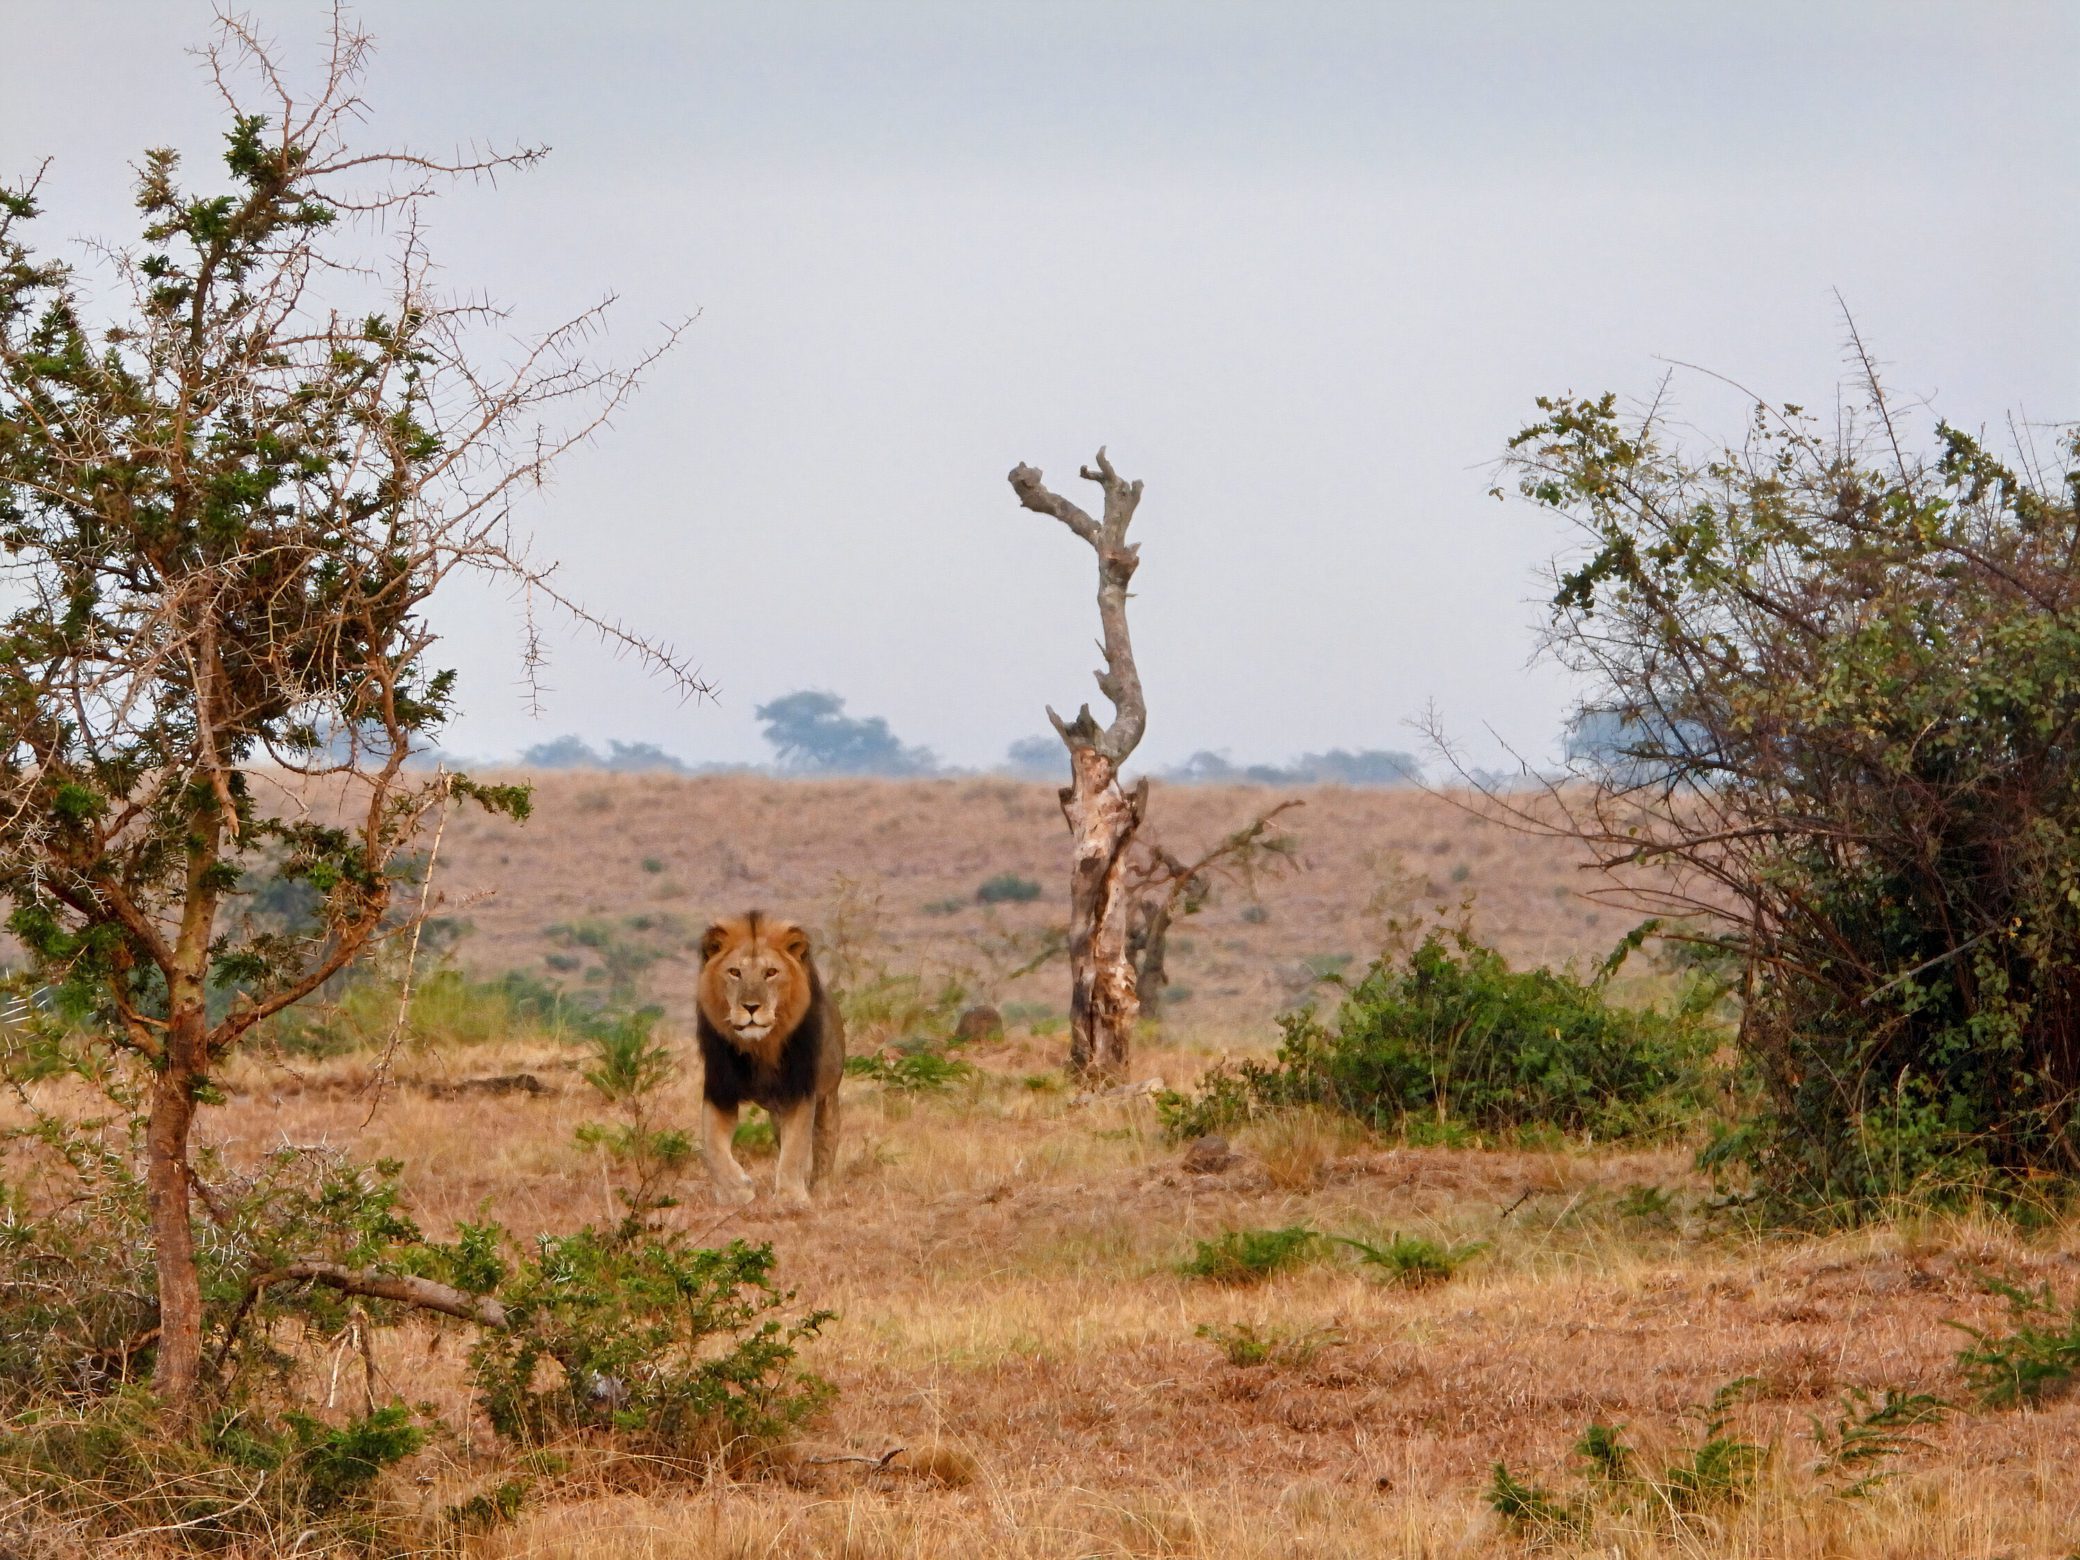 Male lion walking through the grasslands